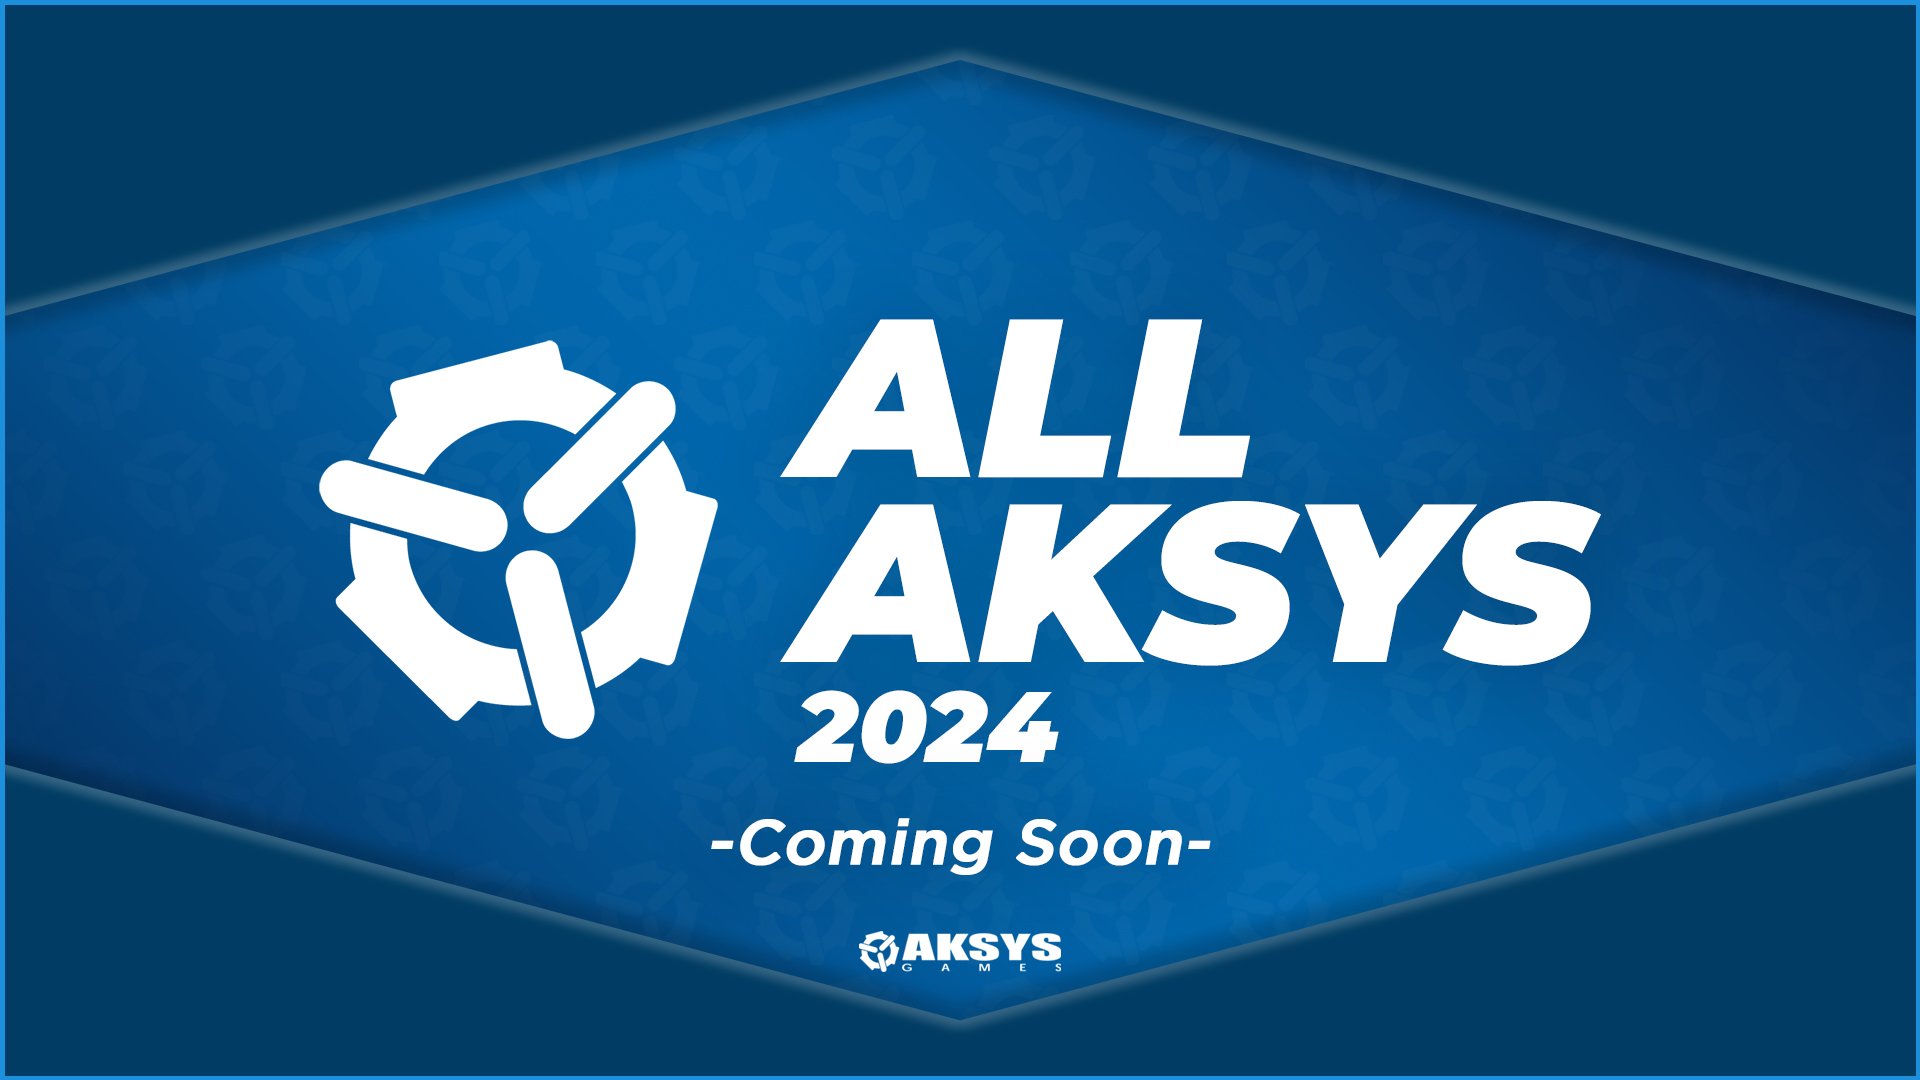 All Aksys 2024